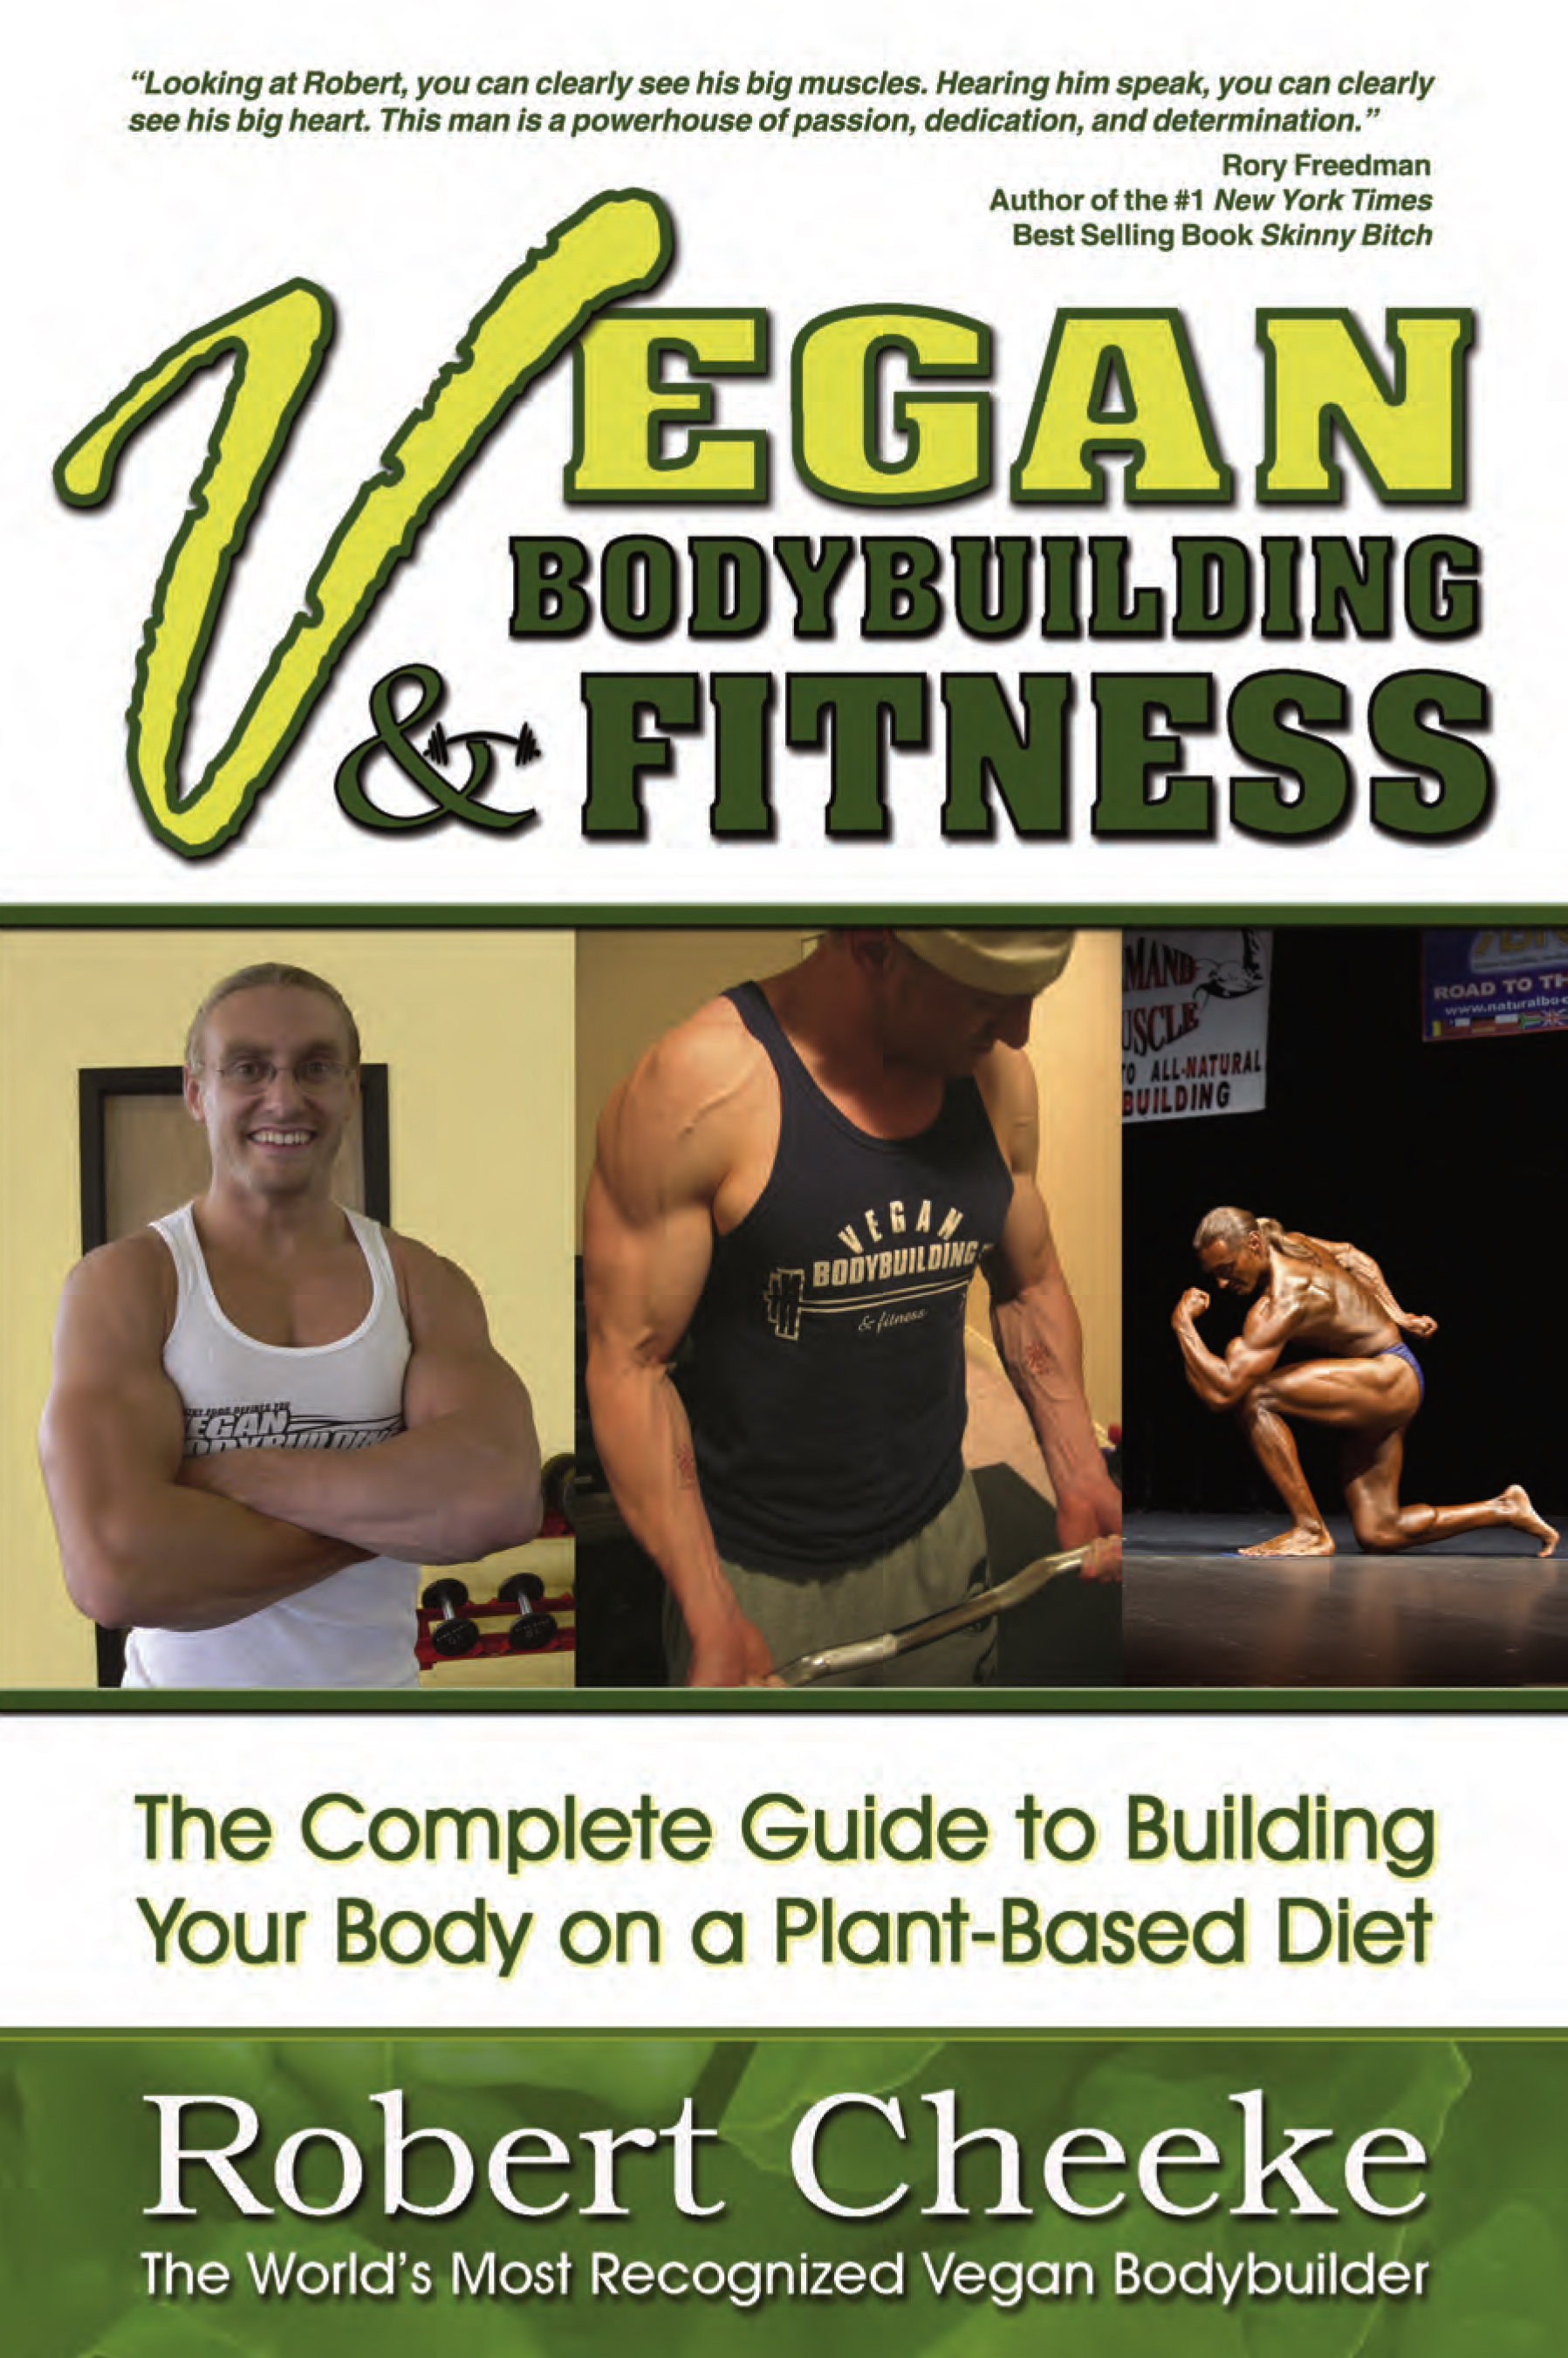 Vegan Bodybuilding And Fitness North American Vegetarian Society